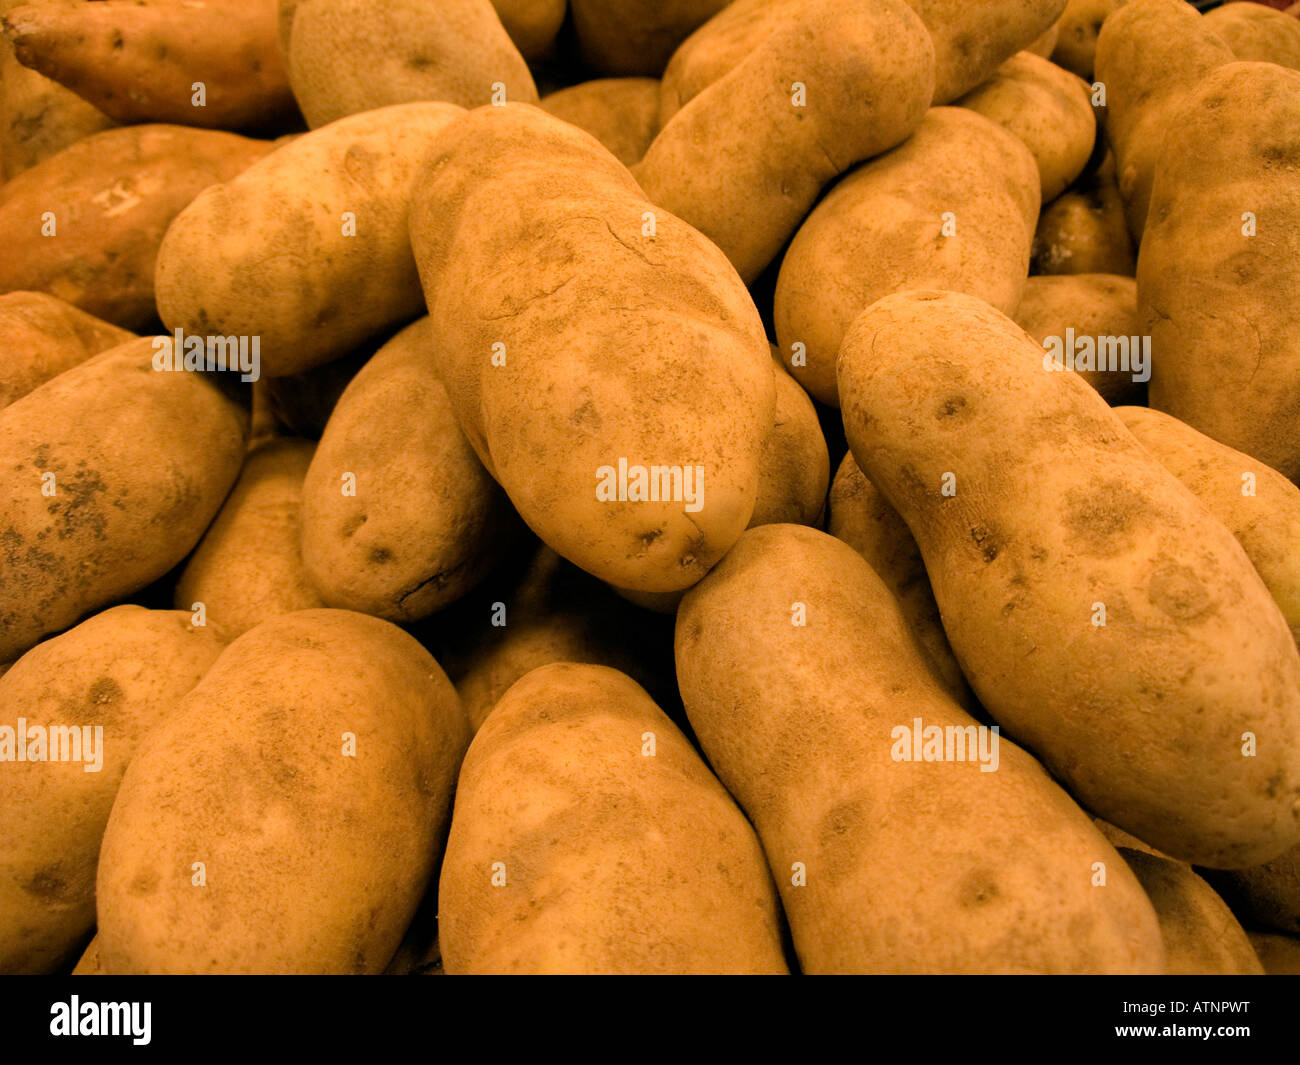 A supermarket display of U S grown potatoes Stock Photo